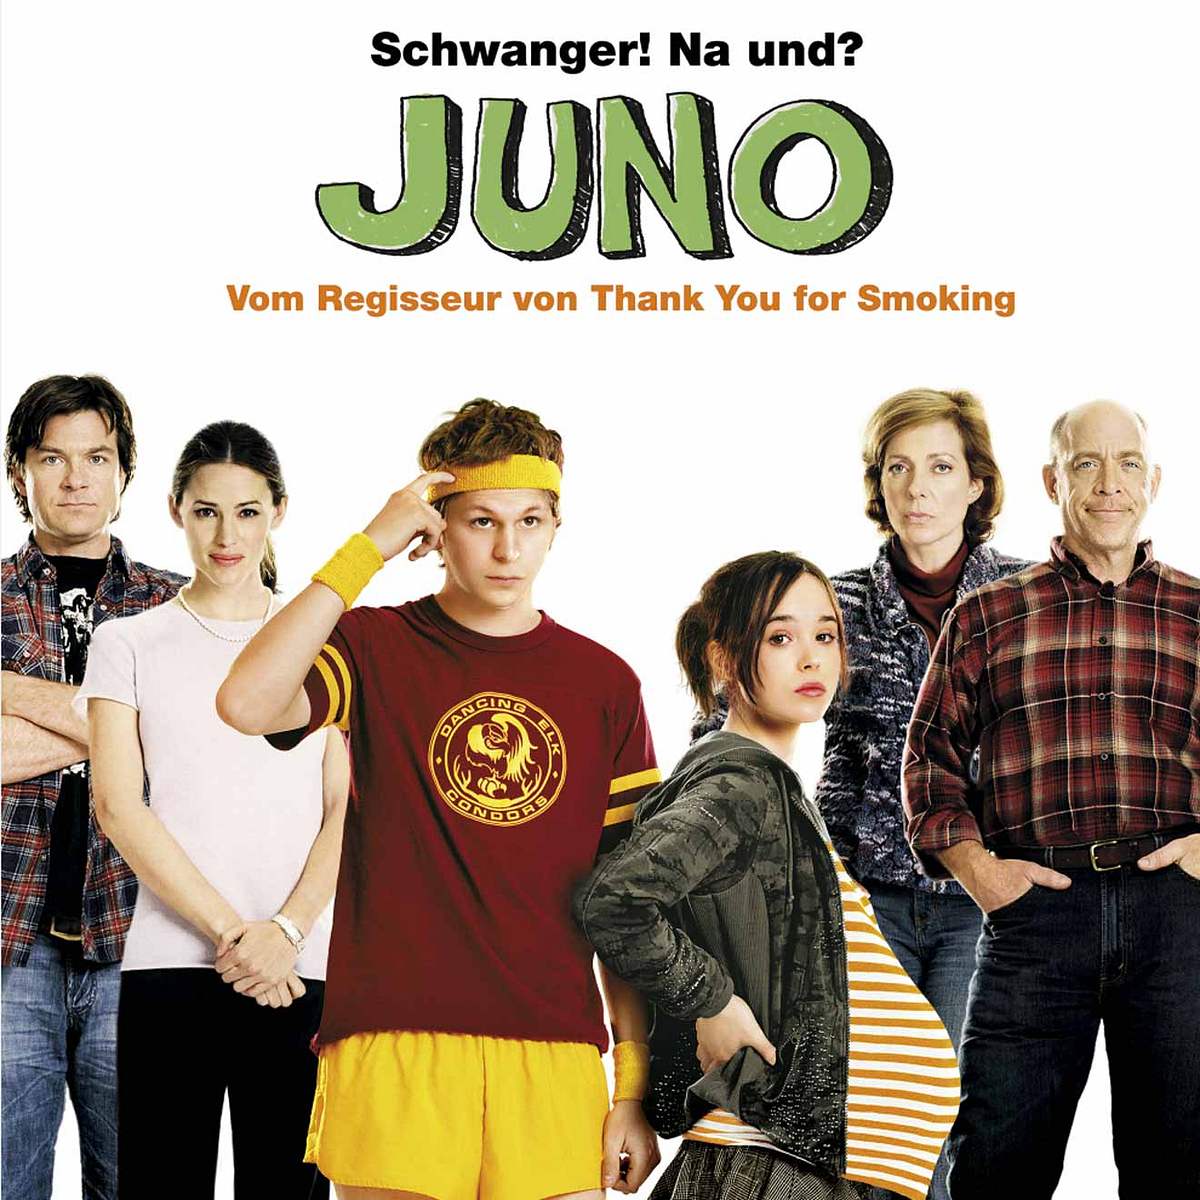 Die besten High School Filme Juno